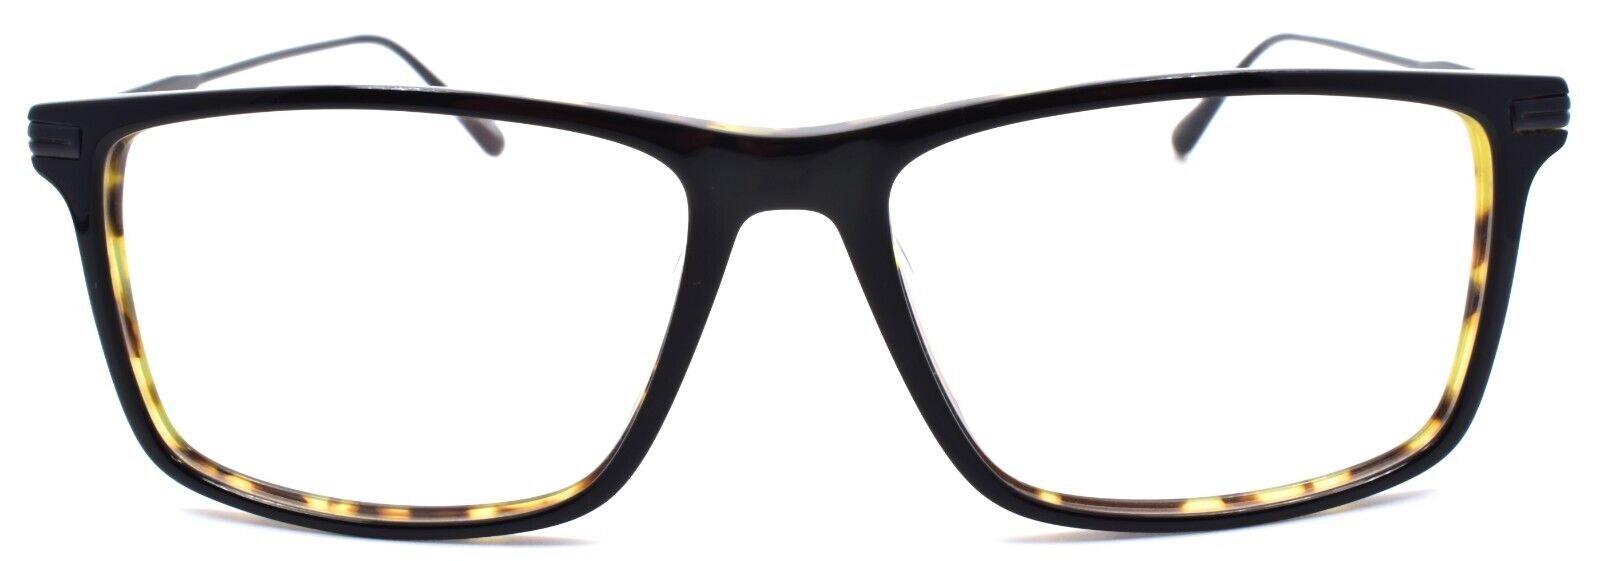 2-John Varvatos V403 Men's Eyeglasses Frames 56-16-145 Black / Tortoise Japan-751286317558-IKSpecs